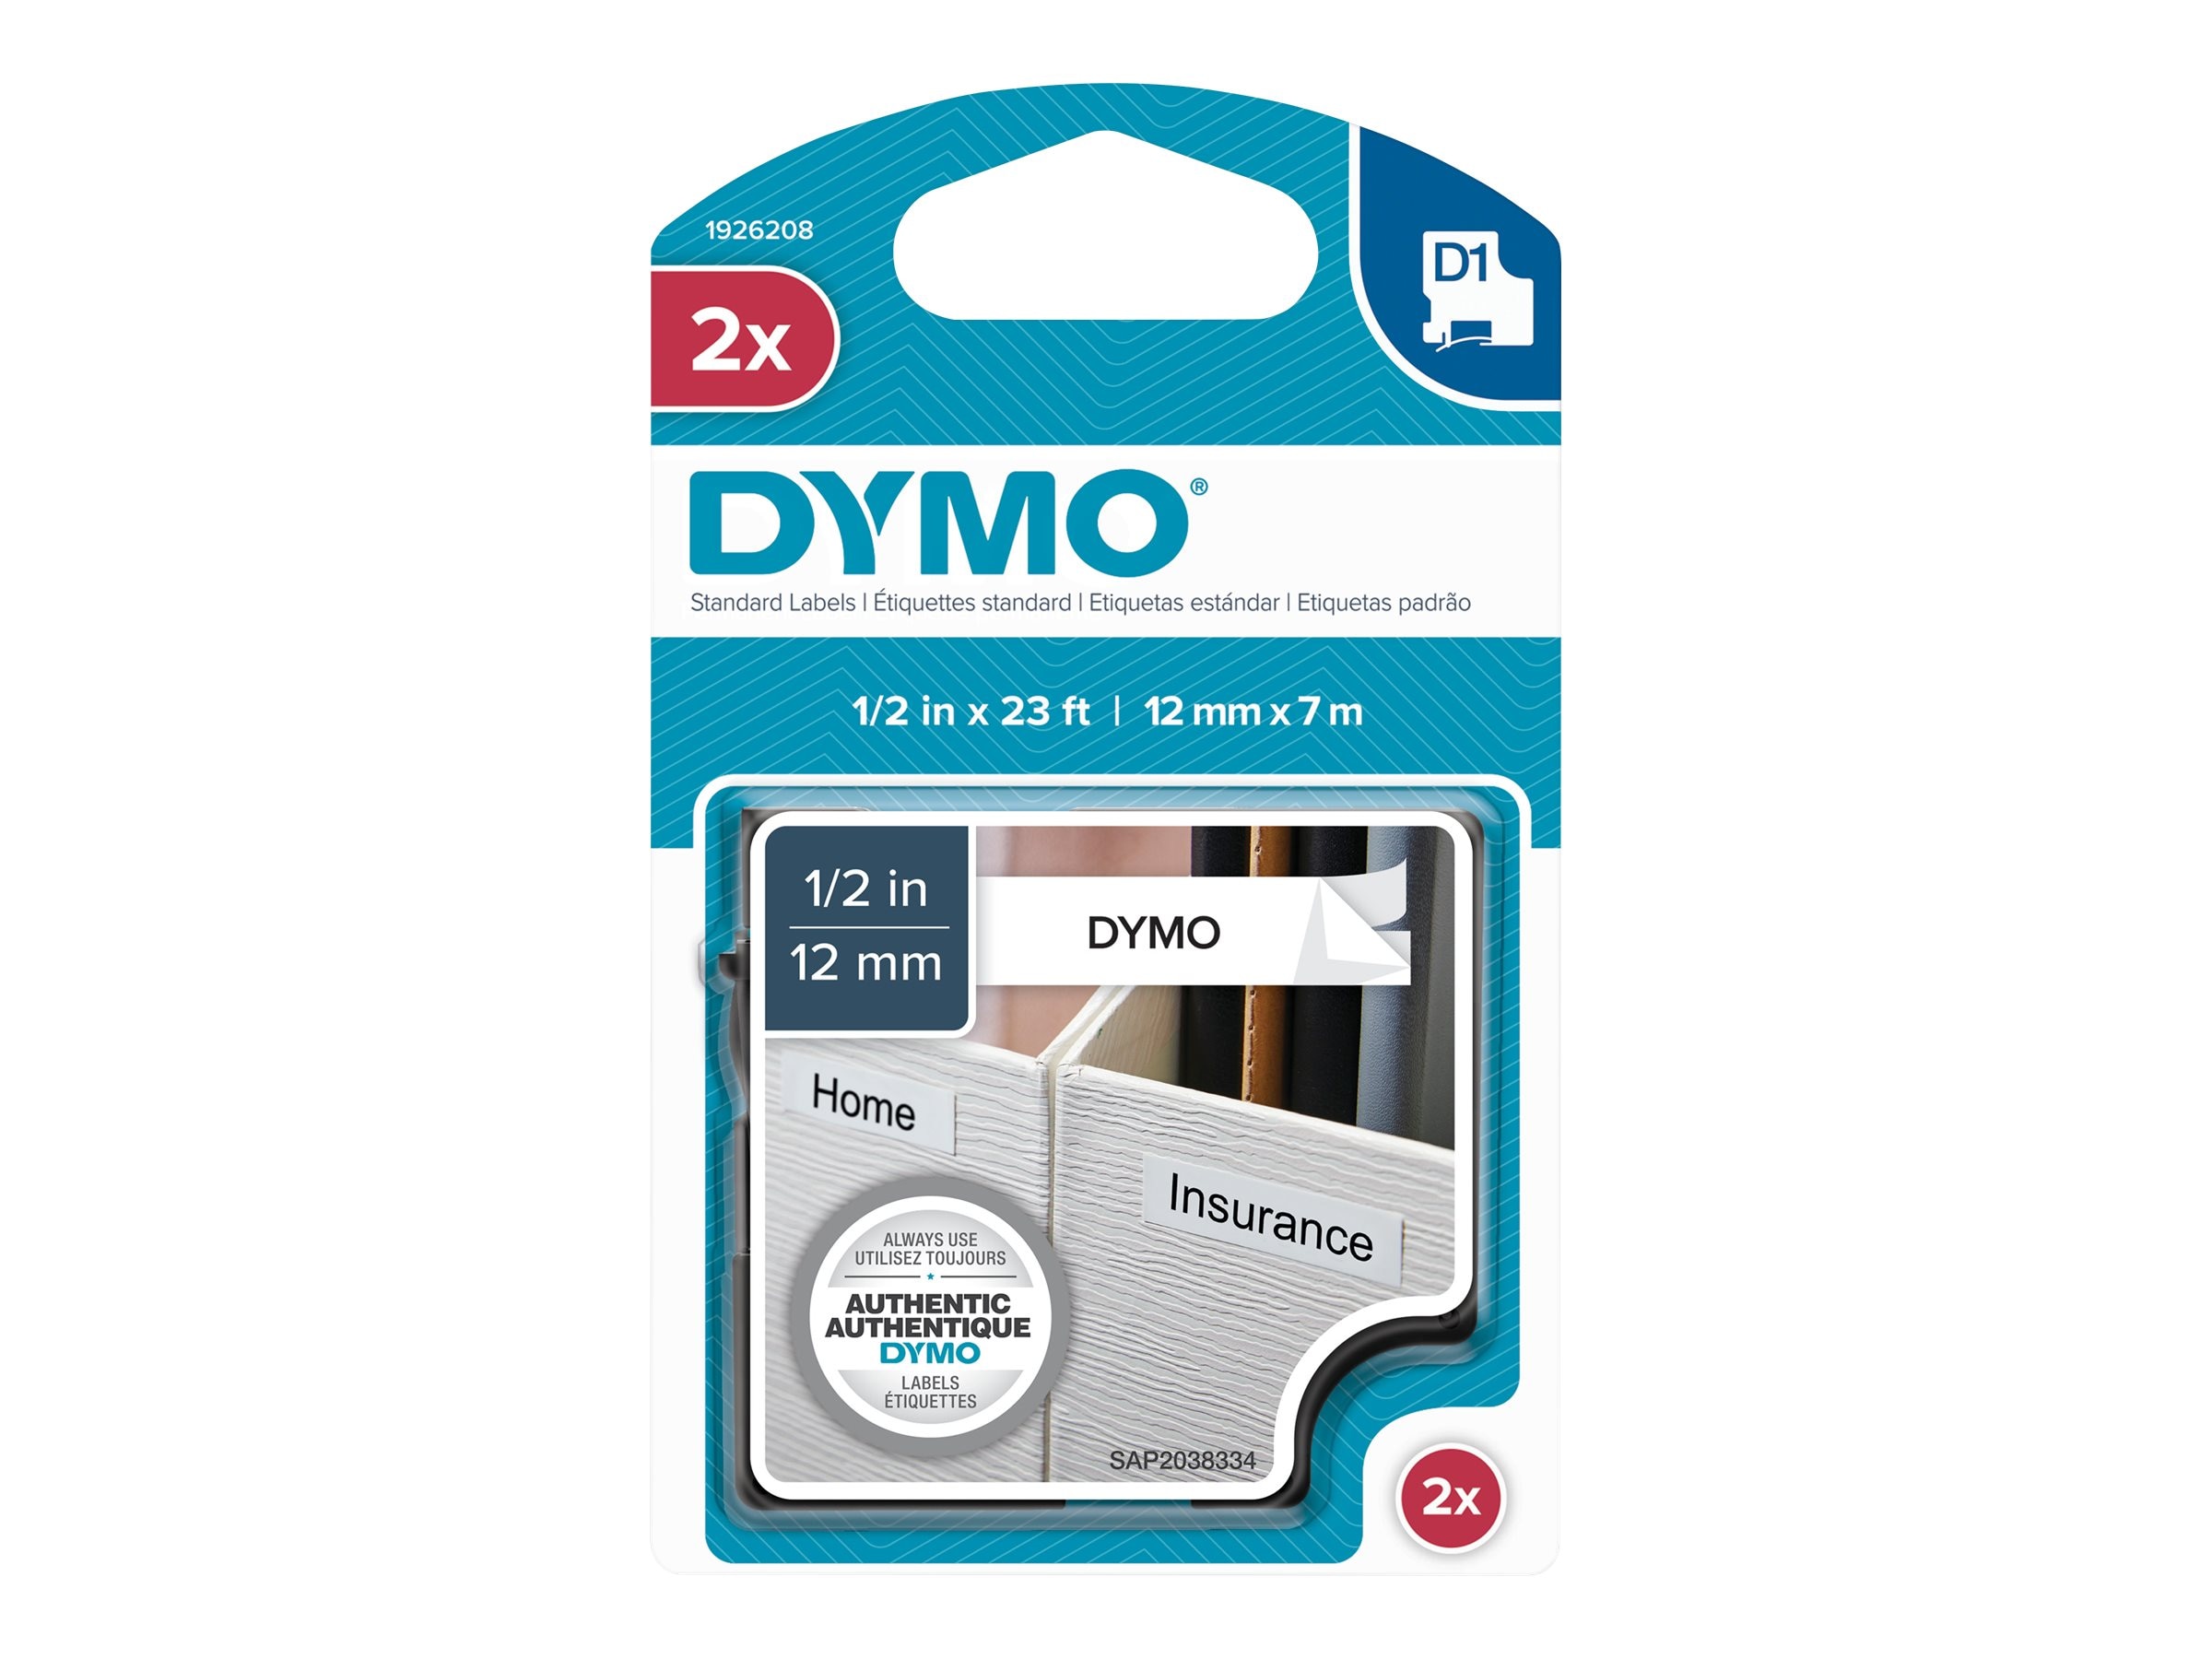 DYMO D1 Standard Labels